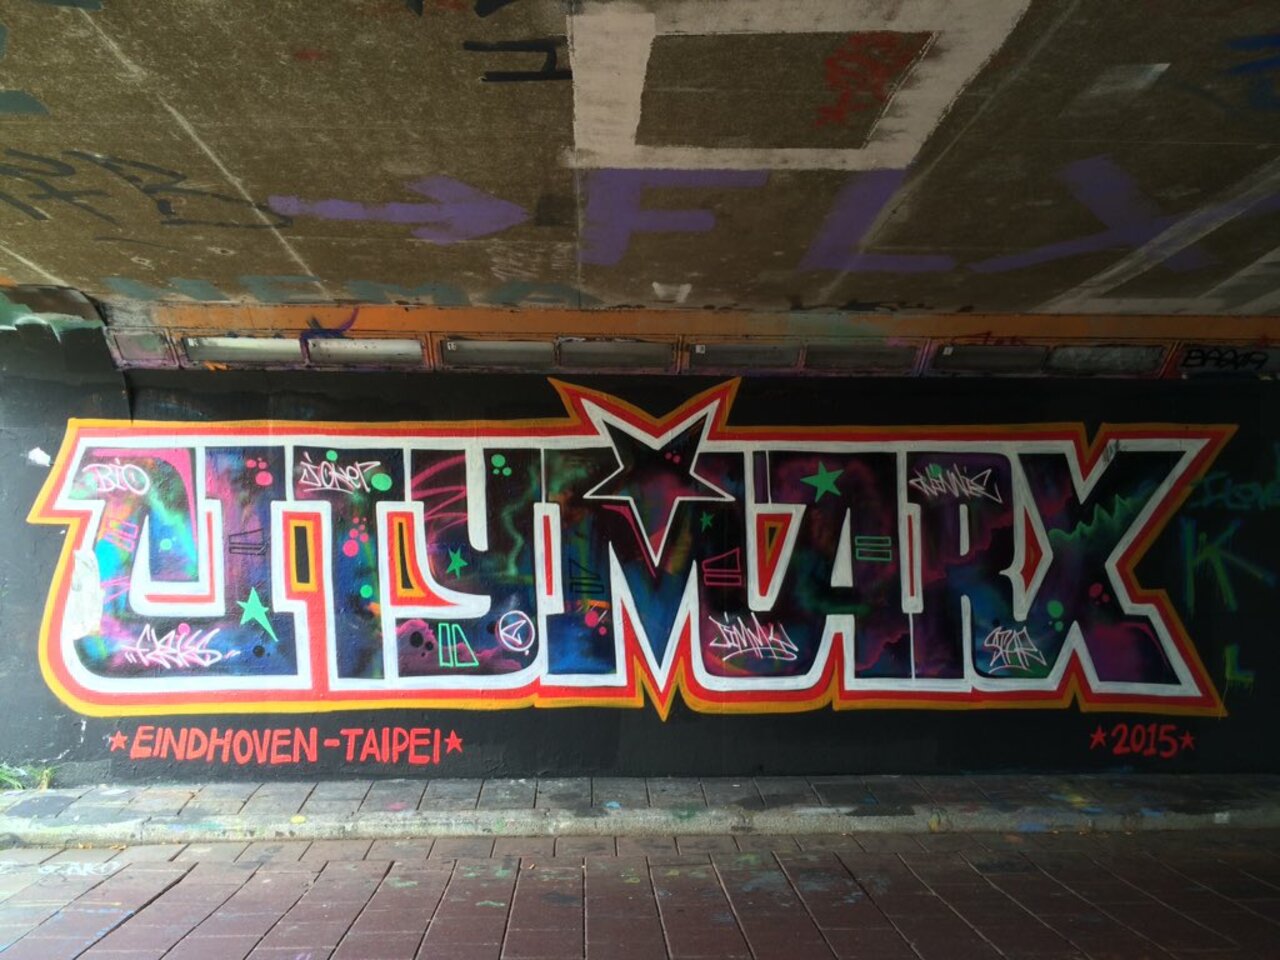 http://twitter.com/pdekruijff/status/657833692426084352 ||Berenkuil.Street.Art.||
#streetart #art #graffiti #graffity #kunst #urban #travel #stre… https://t.co/kIk0Ncuk7F